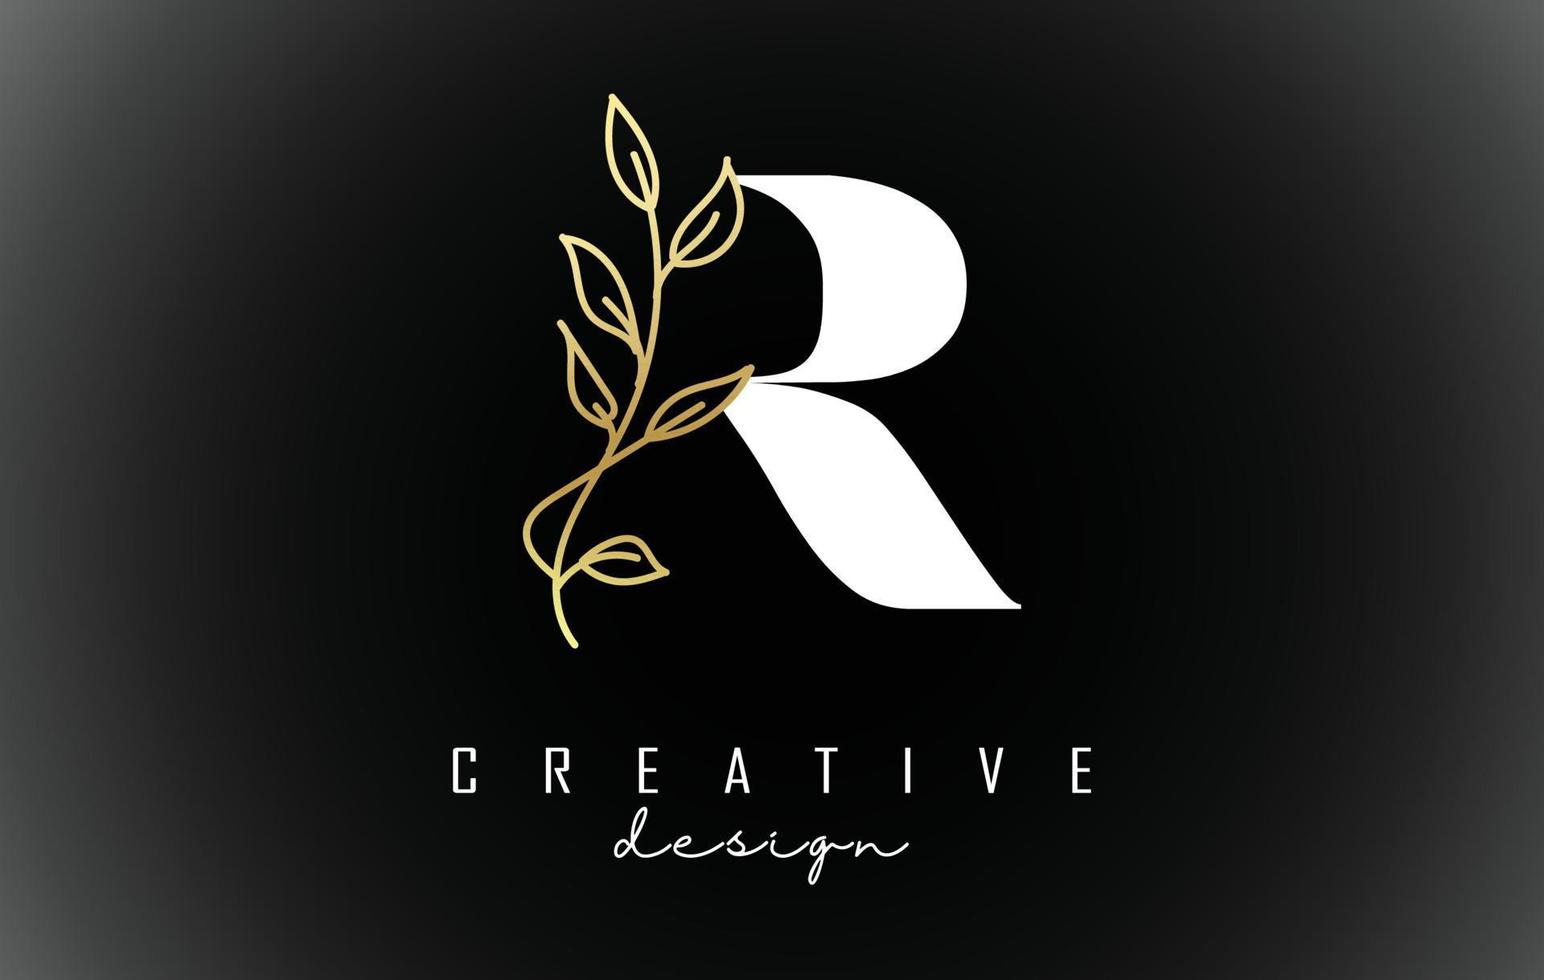 White R letter logo design with golden leaves branch vector ...